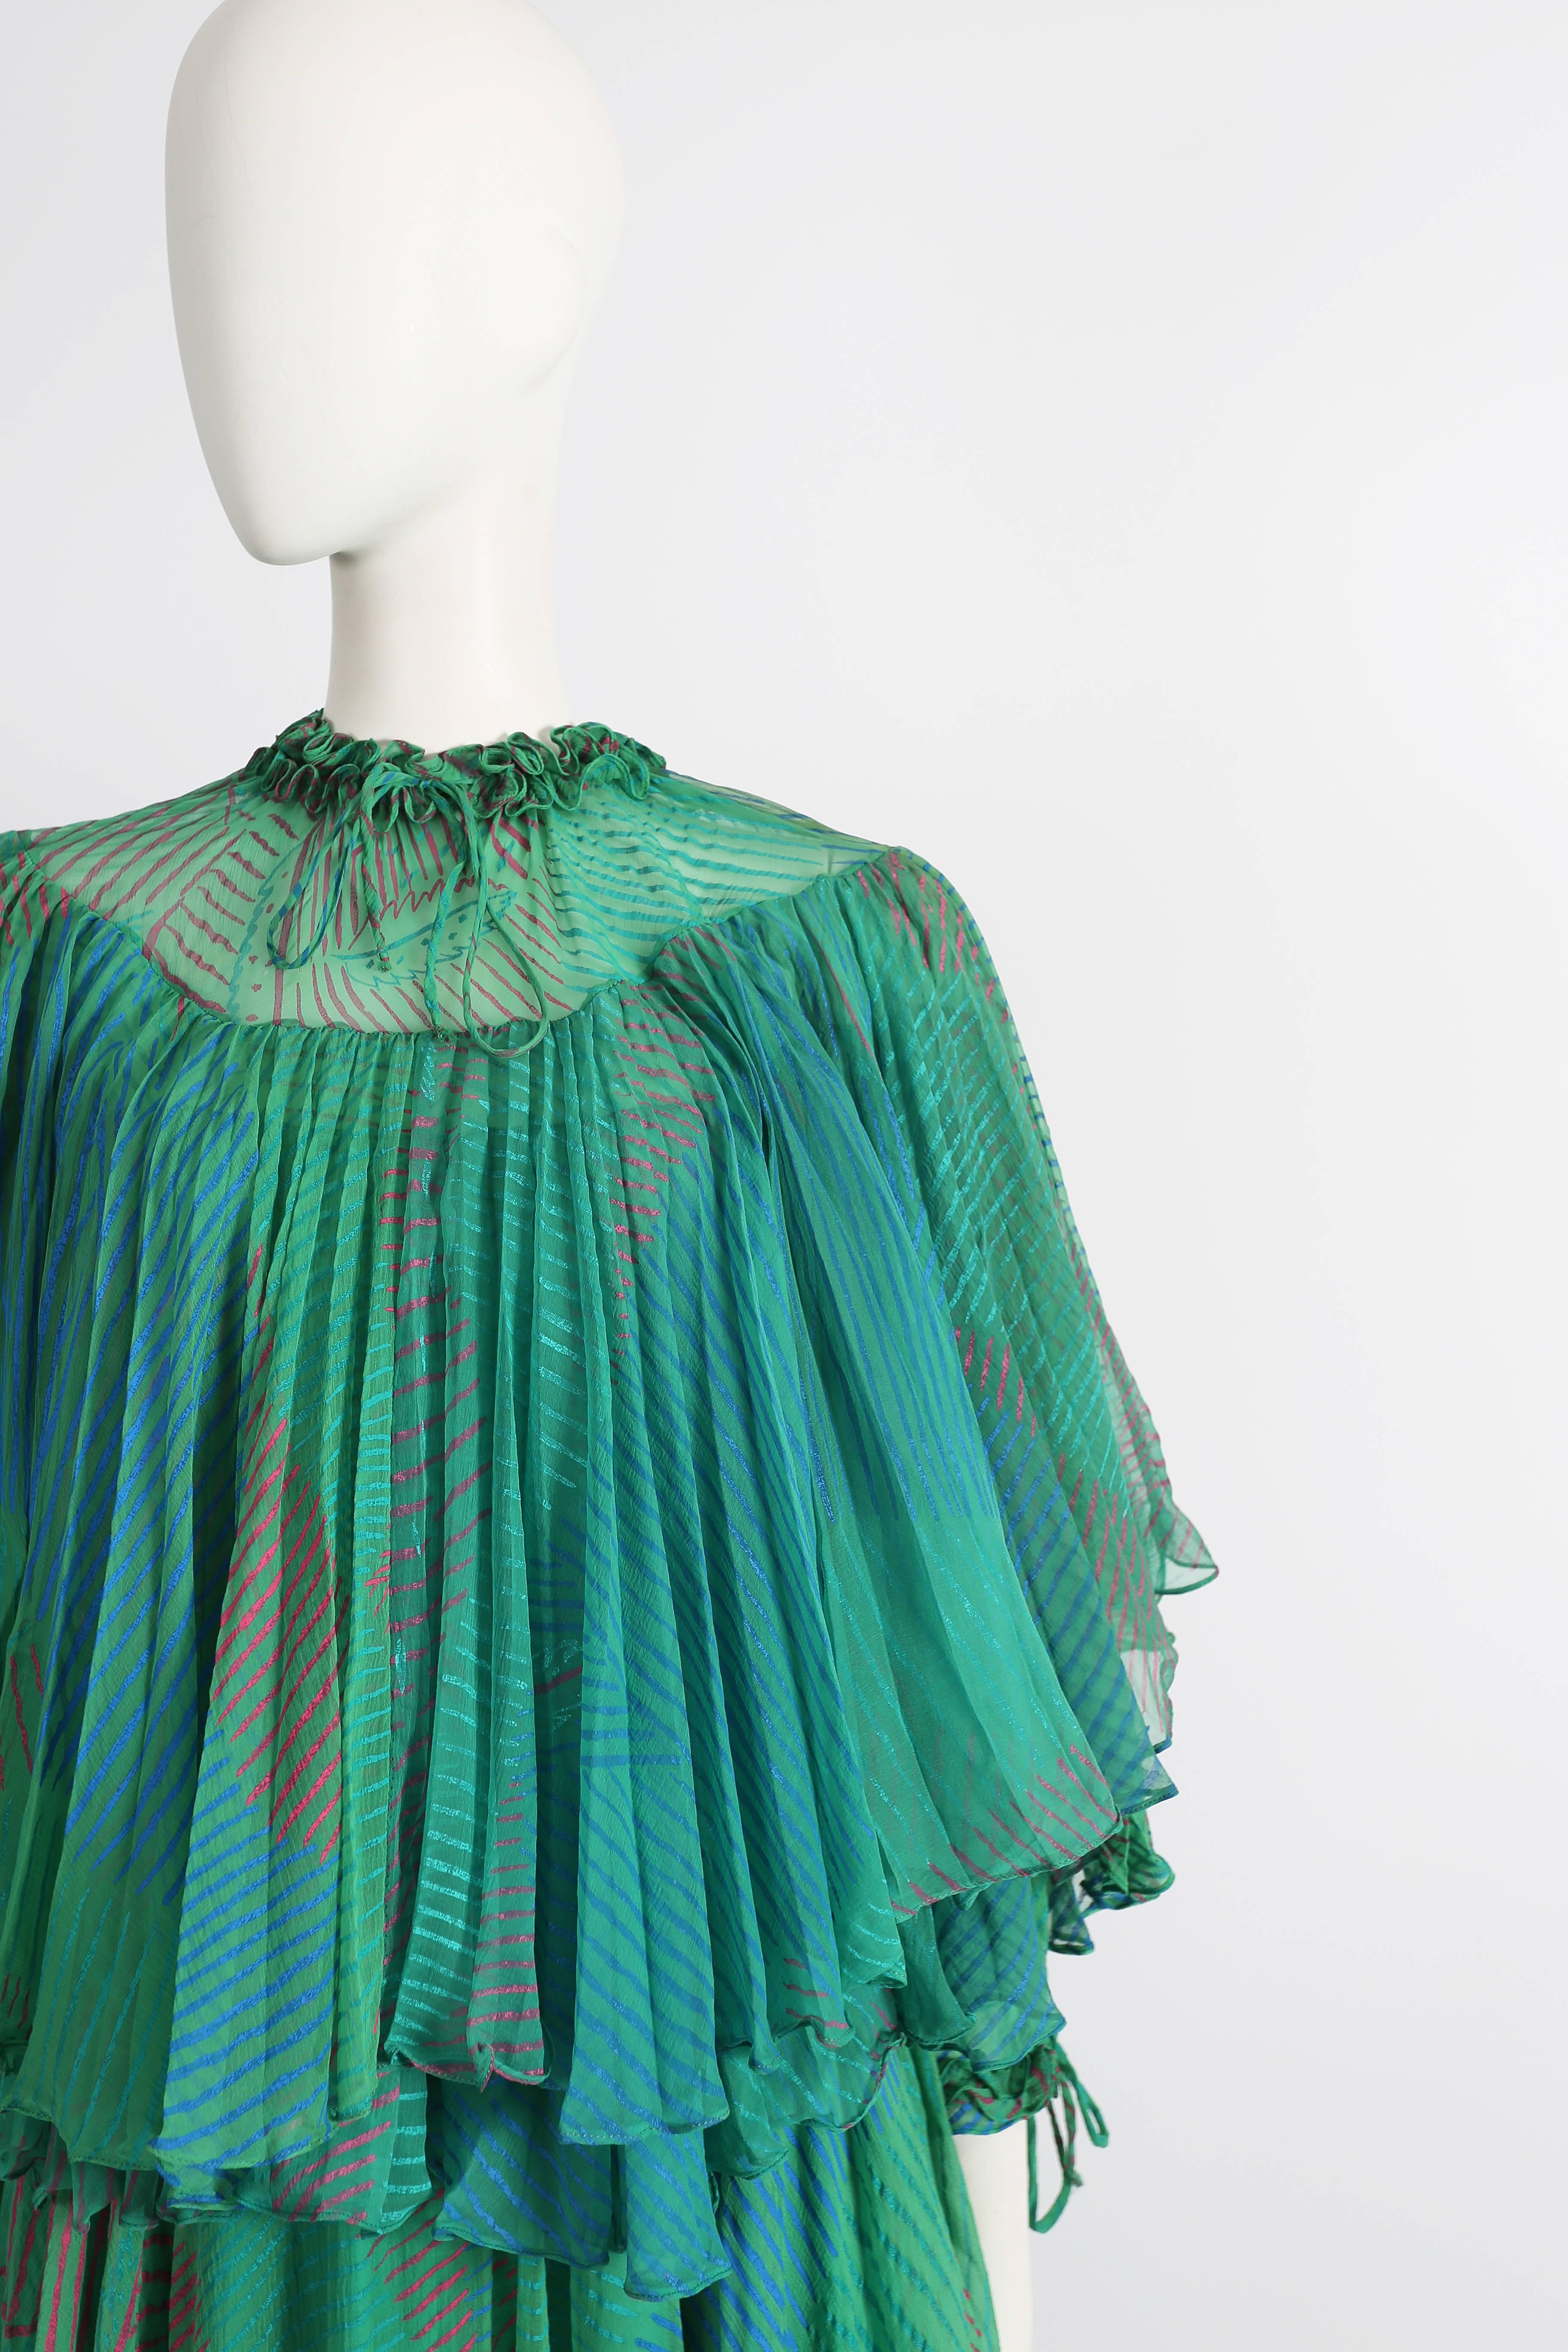 Ossie Clark Celia Birtwell couture silk chiffon screen-print dress, circa 1976 In Excellent Condition In London, GB